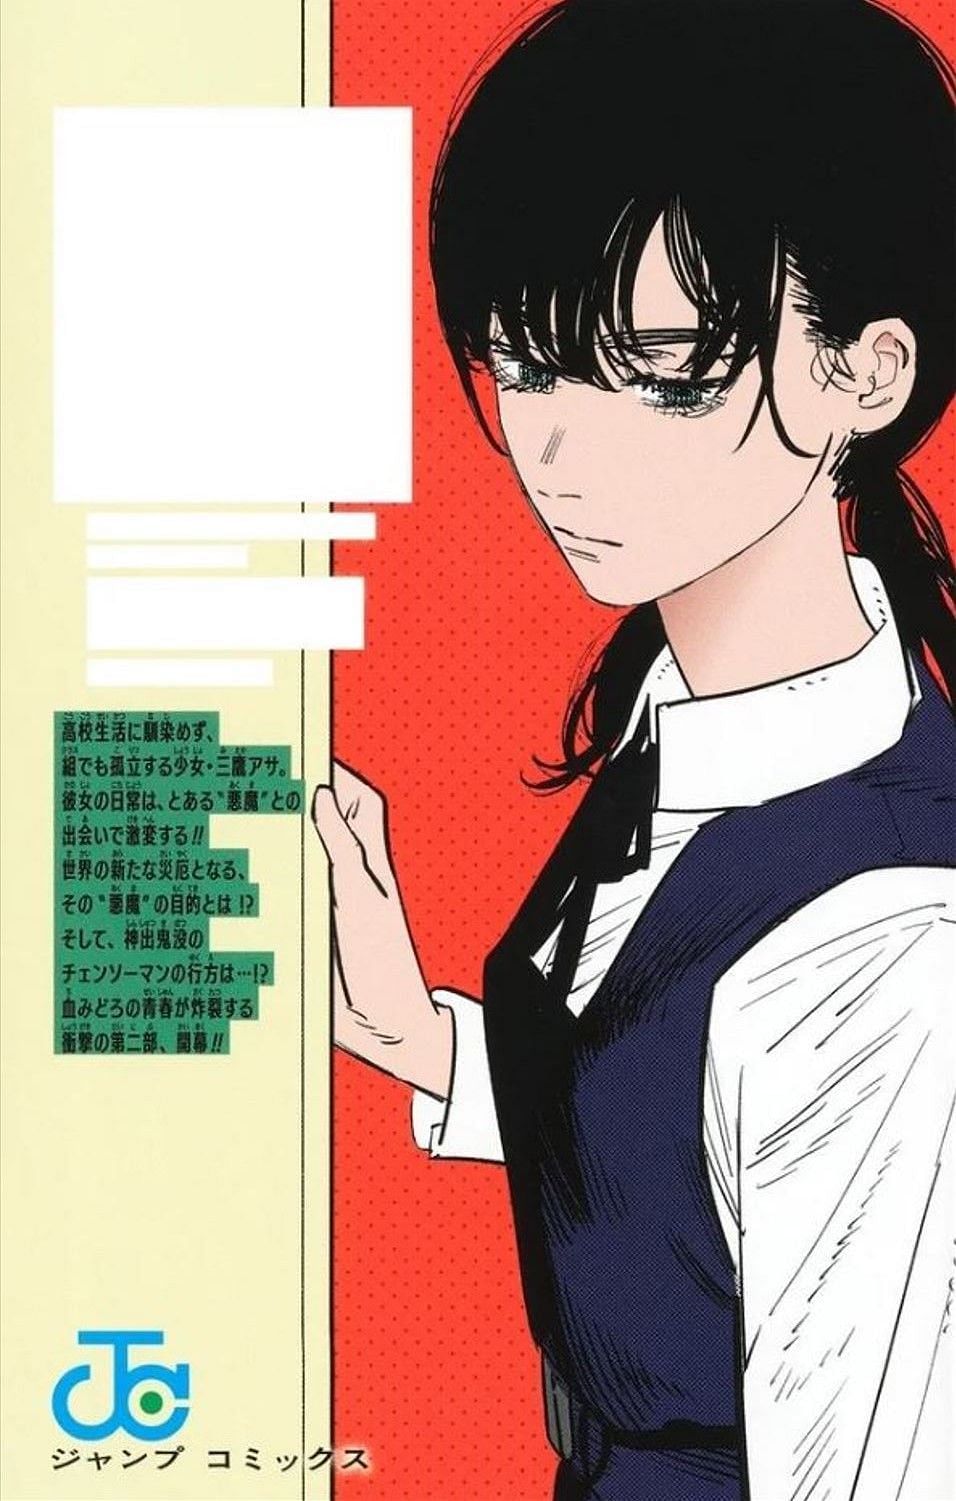 Volume 12 Back Cover (Image via Shueisha)